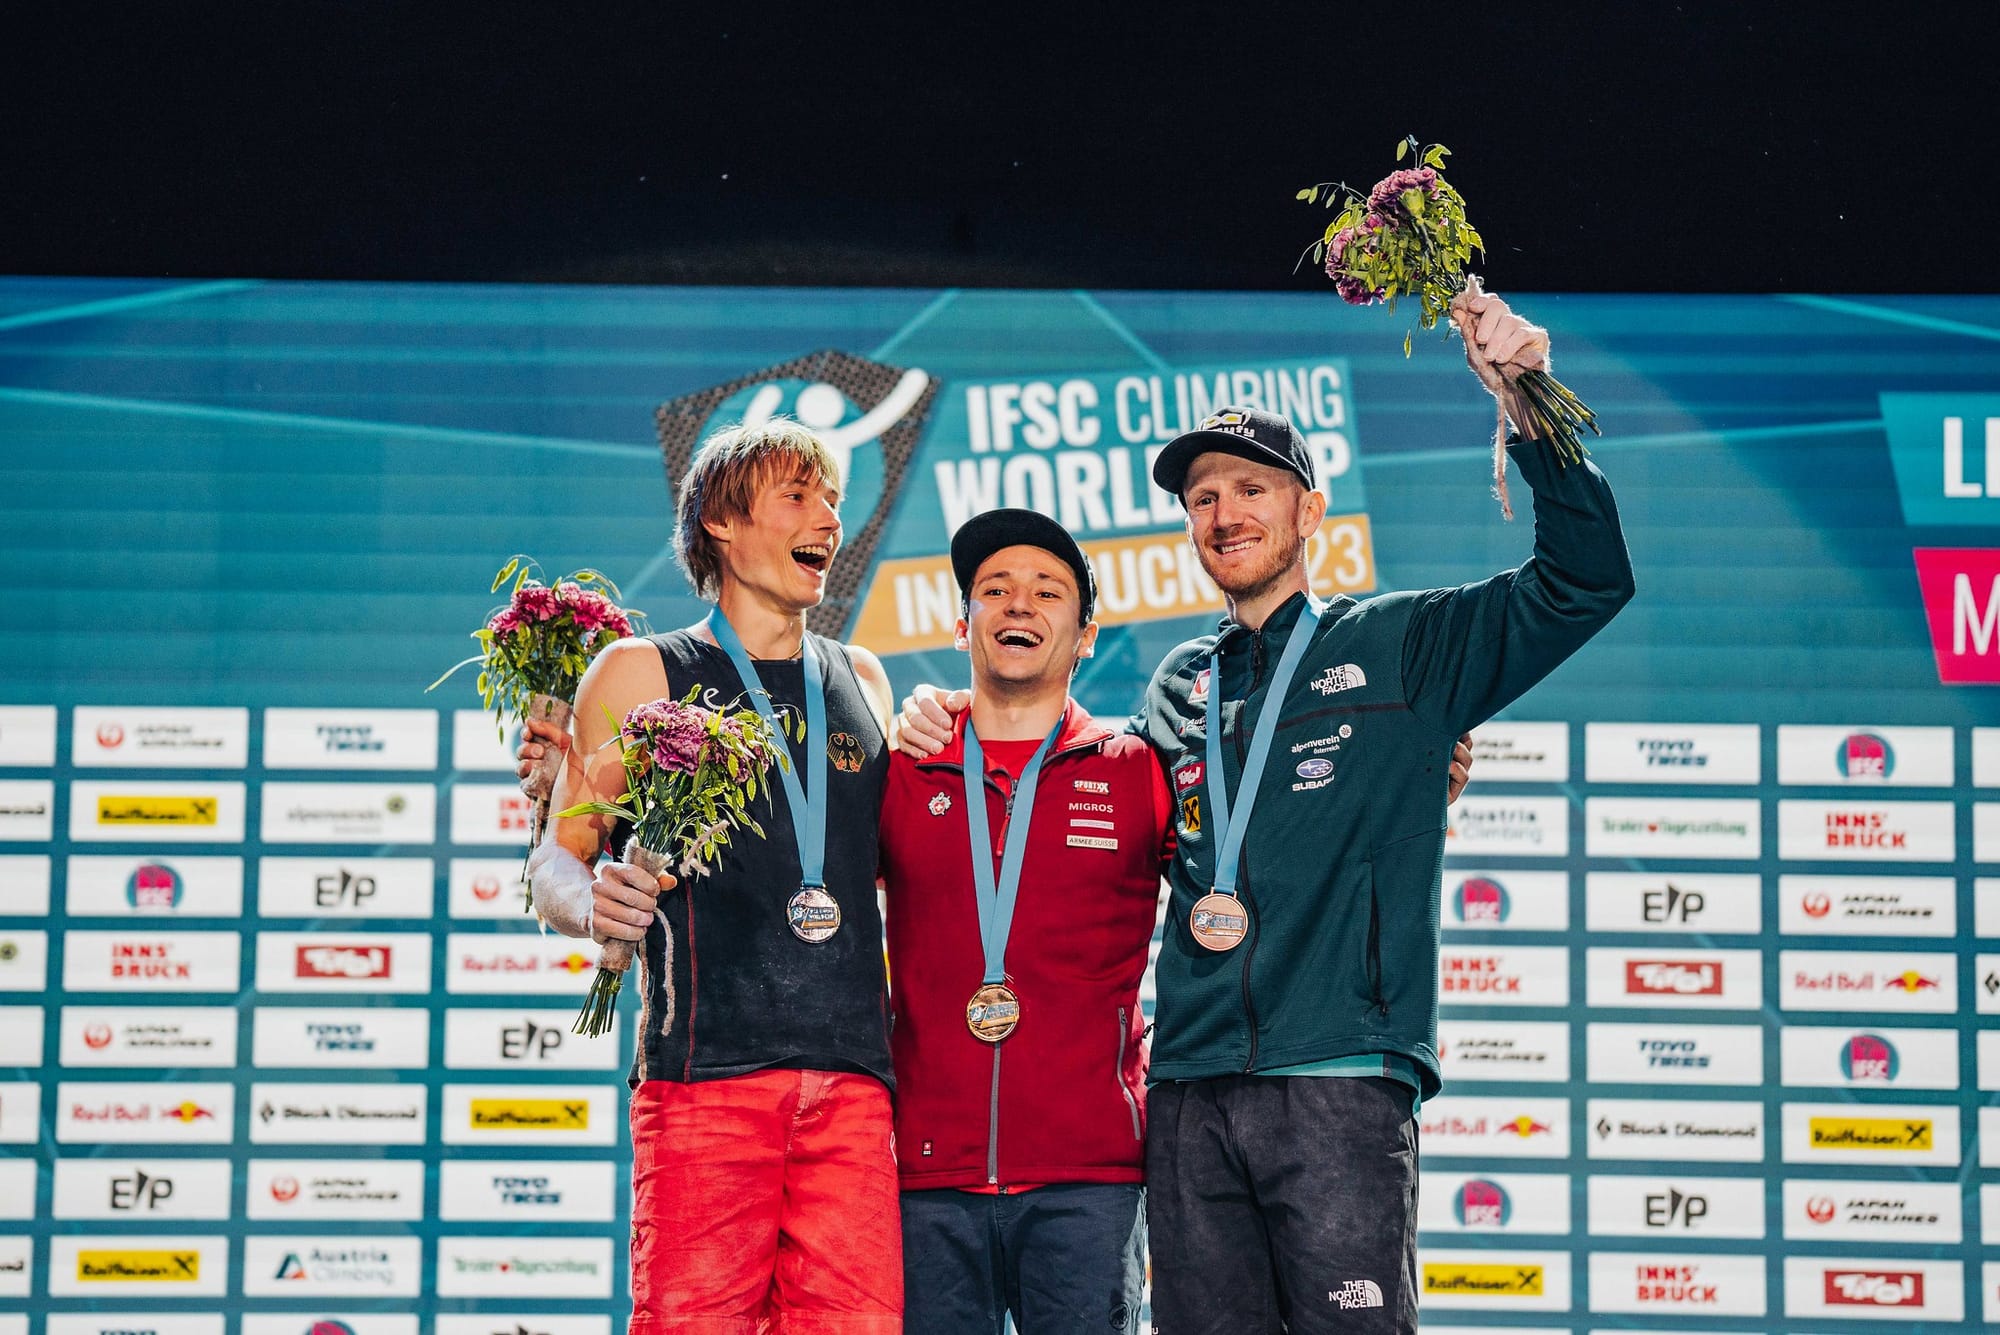 Sascha Lehmann, Alex Megos and Jakob Schubert celebrate their medals.